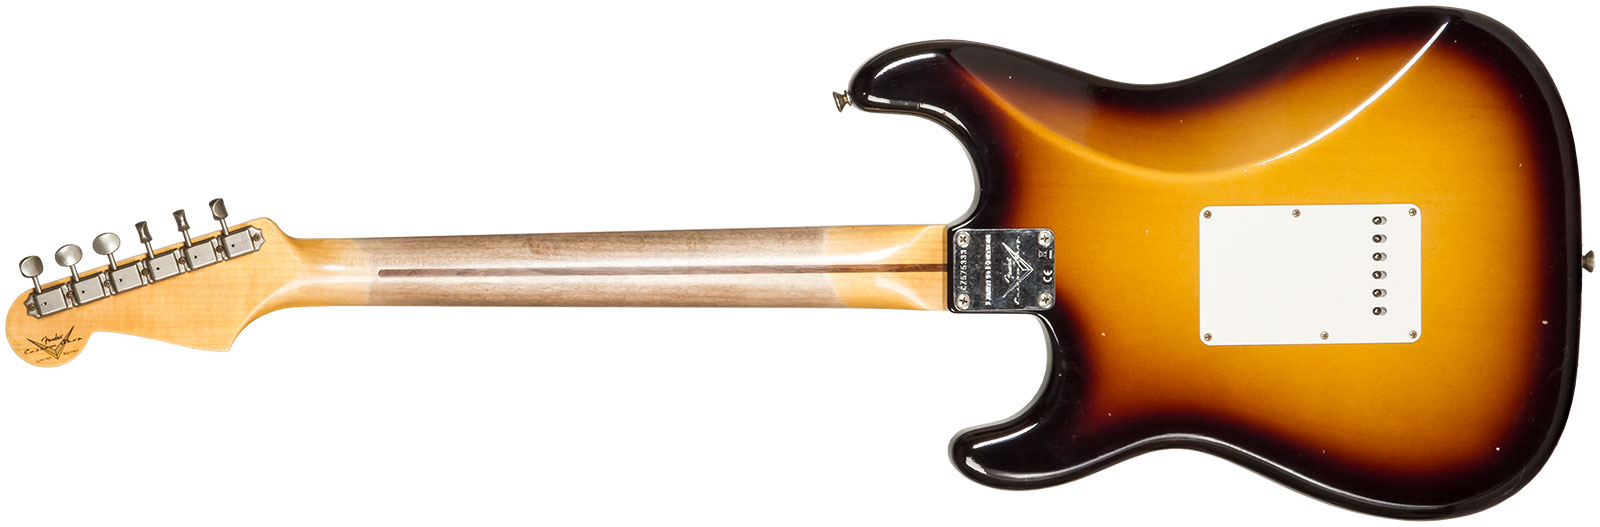 Fender Custom Shop Strat 1956 3s Trem Mn #cz575333 - Journeyman Relic 2-color Sunburst - Guitarra eléctrica con forma de str. - Variation 1